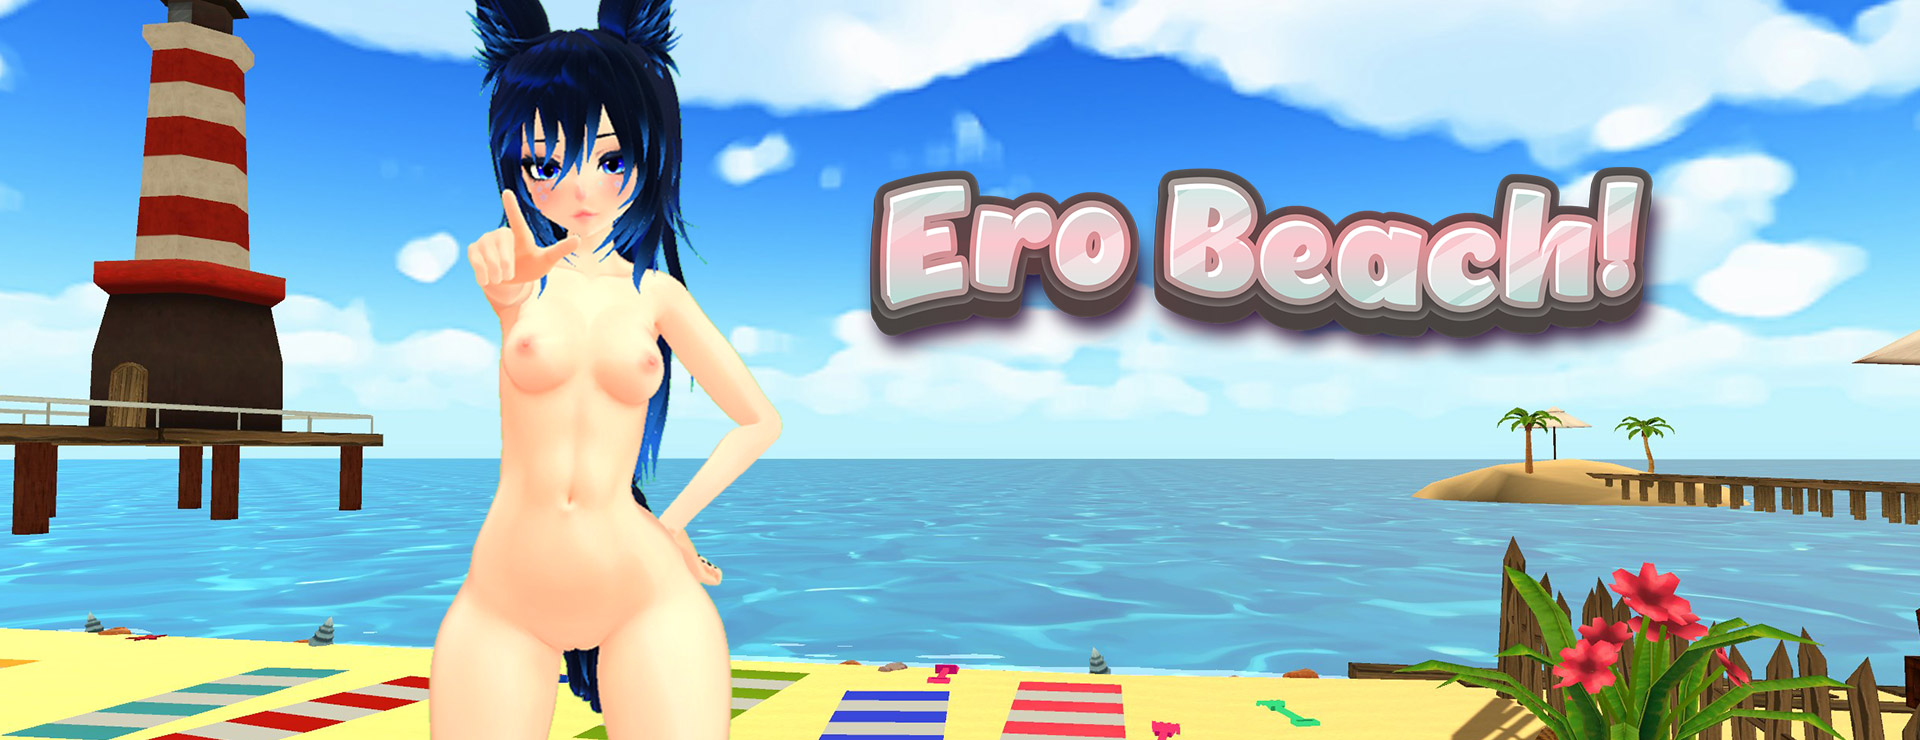 Ero Beach! - Simulation Game